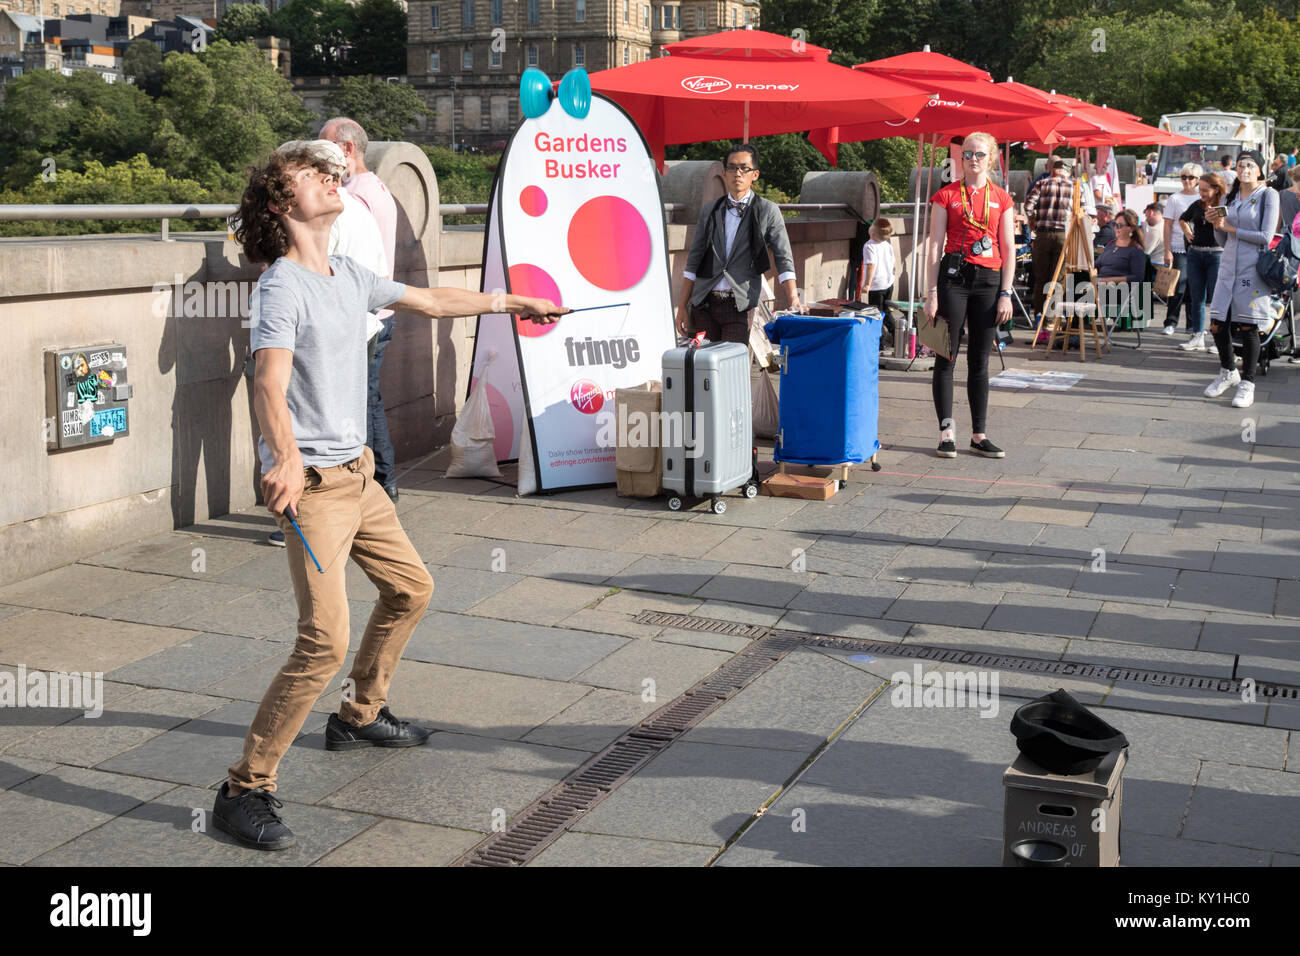 Street performer, Edinburgh. Scotland Stock Photo